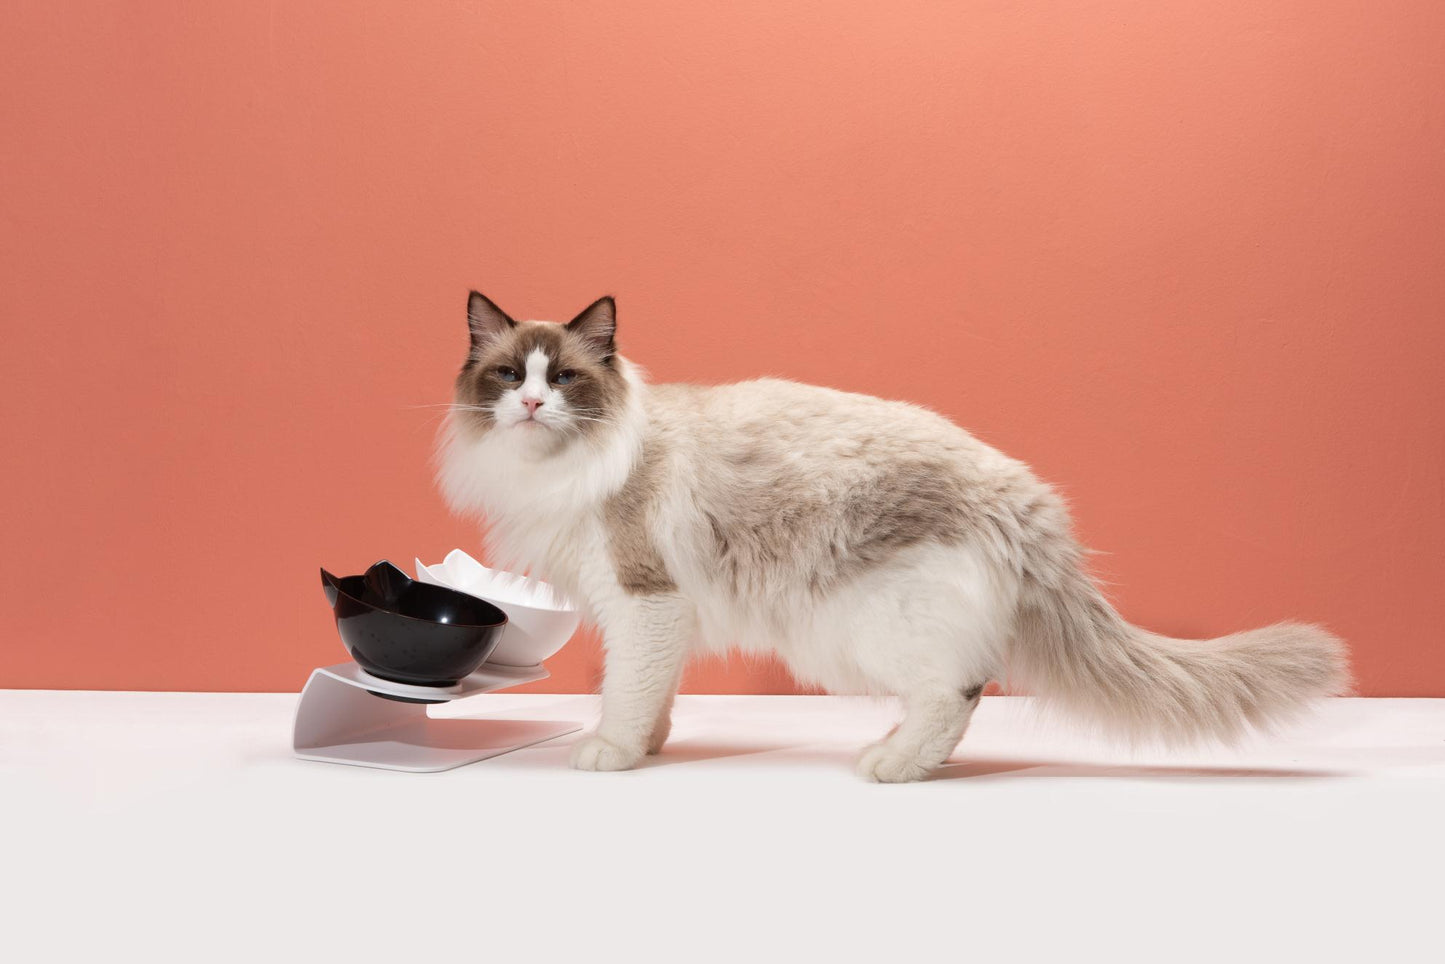 Anti-Vomiting Orthopedic Cat Bowl